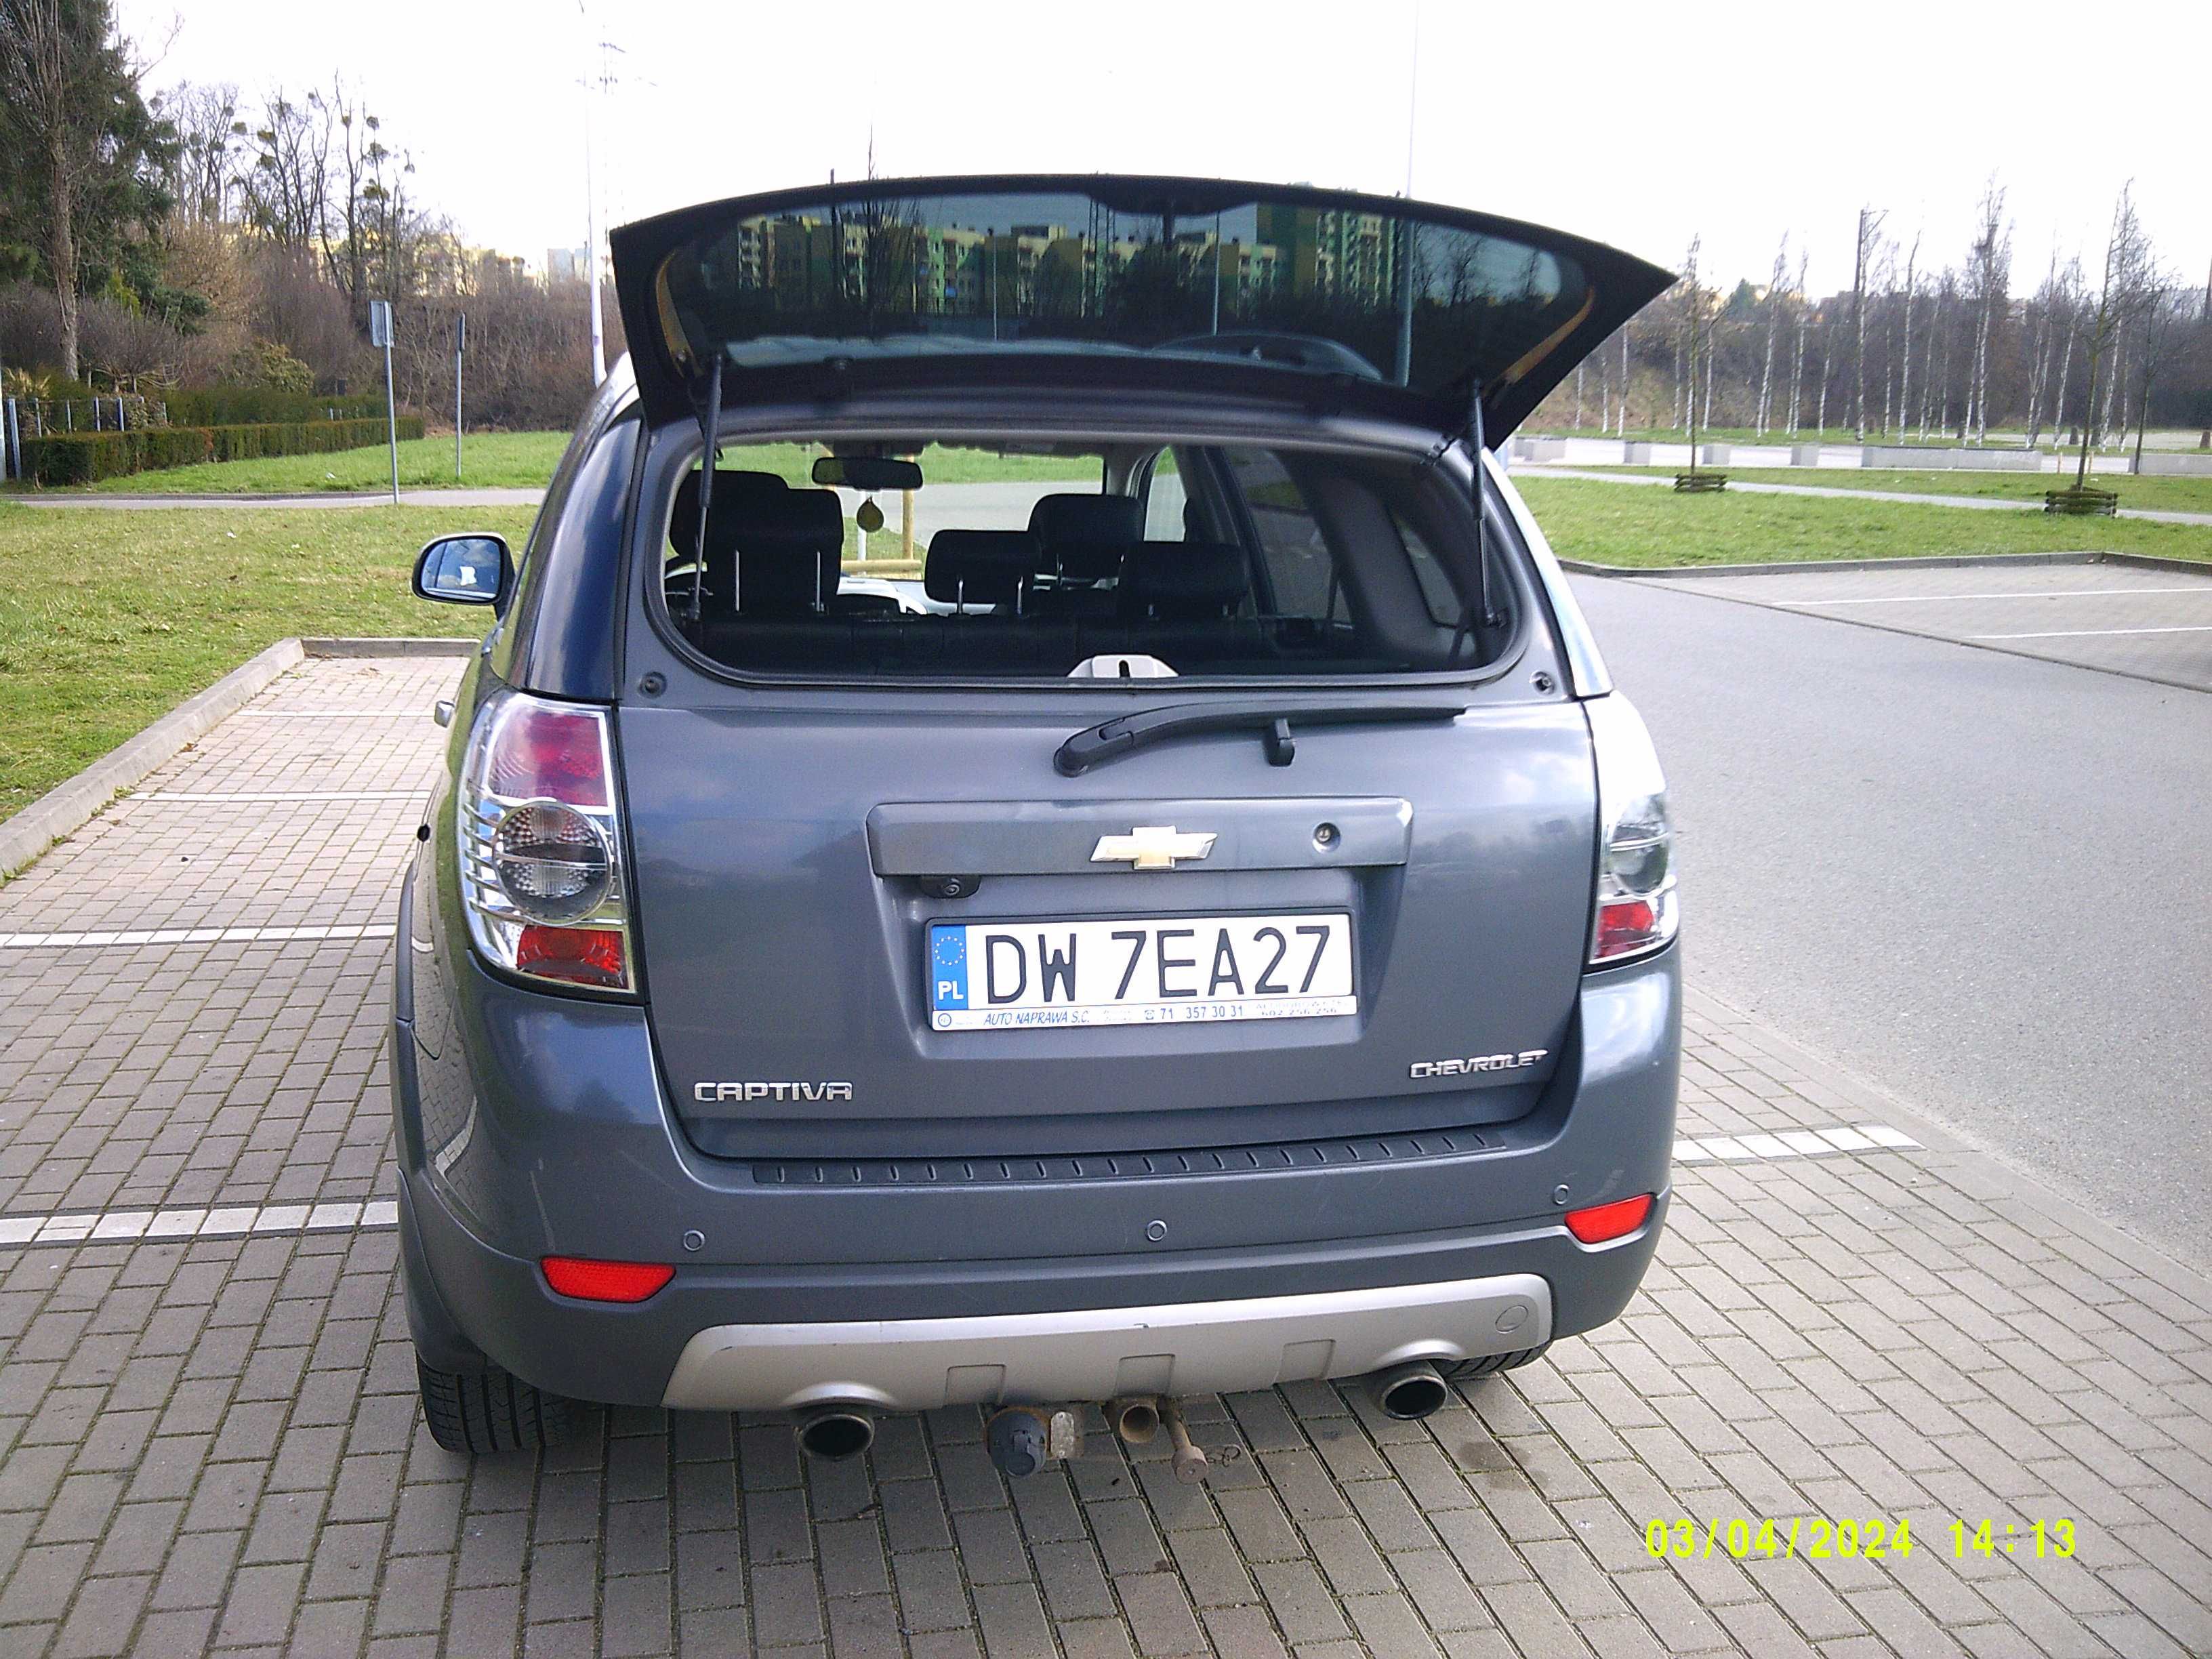 Chevrolet Captiva 2,2 D. LTZ,4x4, 7miejsc,Hak hol. Salon Pol,2011-12r.